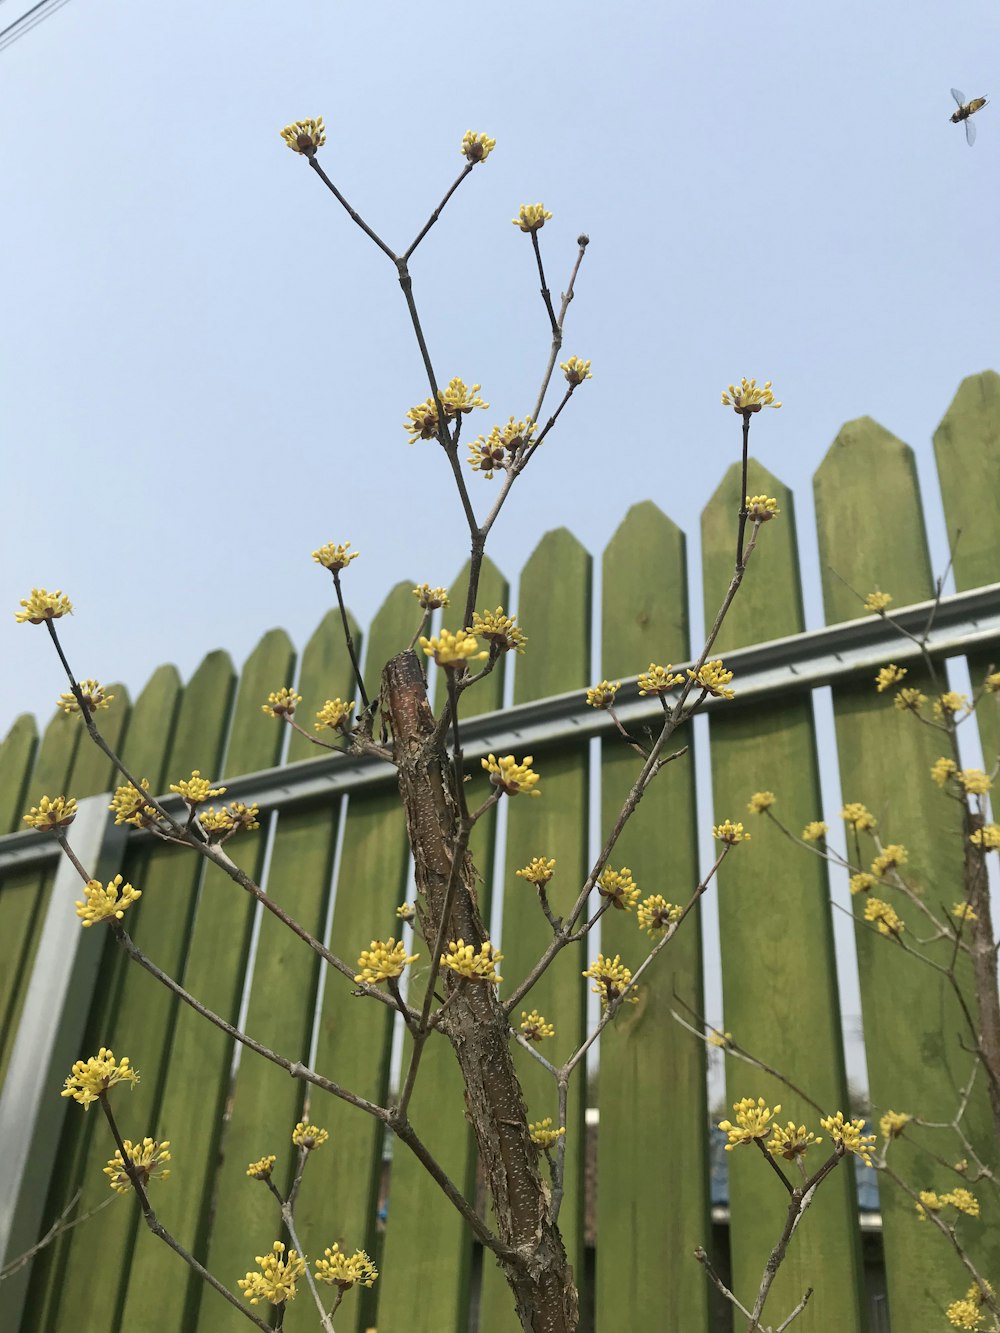 yellow flower tree near green wooden fence under blue sky